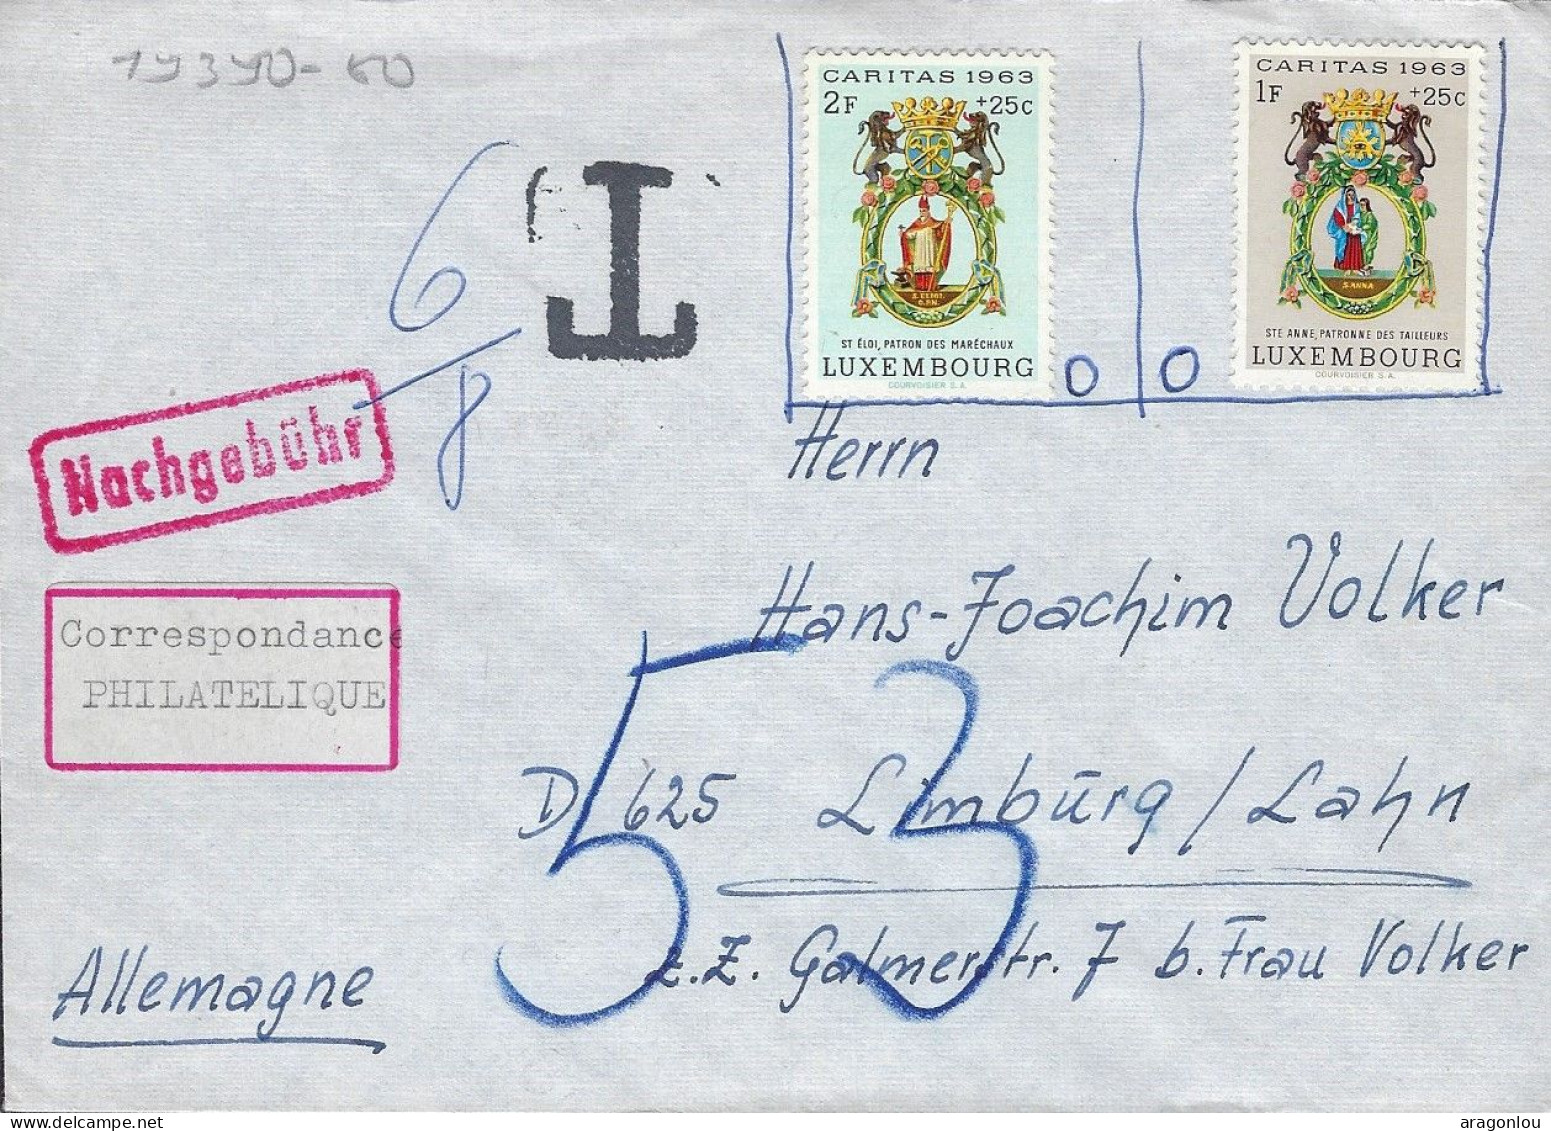 Luxembourg - Luxemburg - Lettre   Taxes  1963  Nachgebühr     Adressiert An Herrn Joachim Volker , Limburg / Lahn - Postage Due